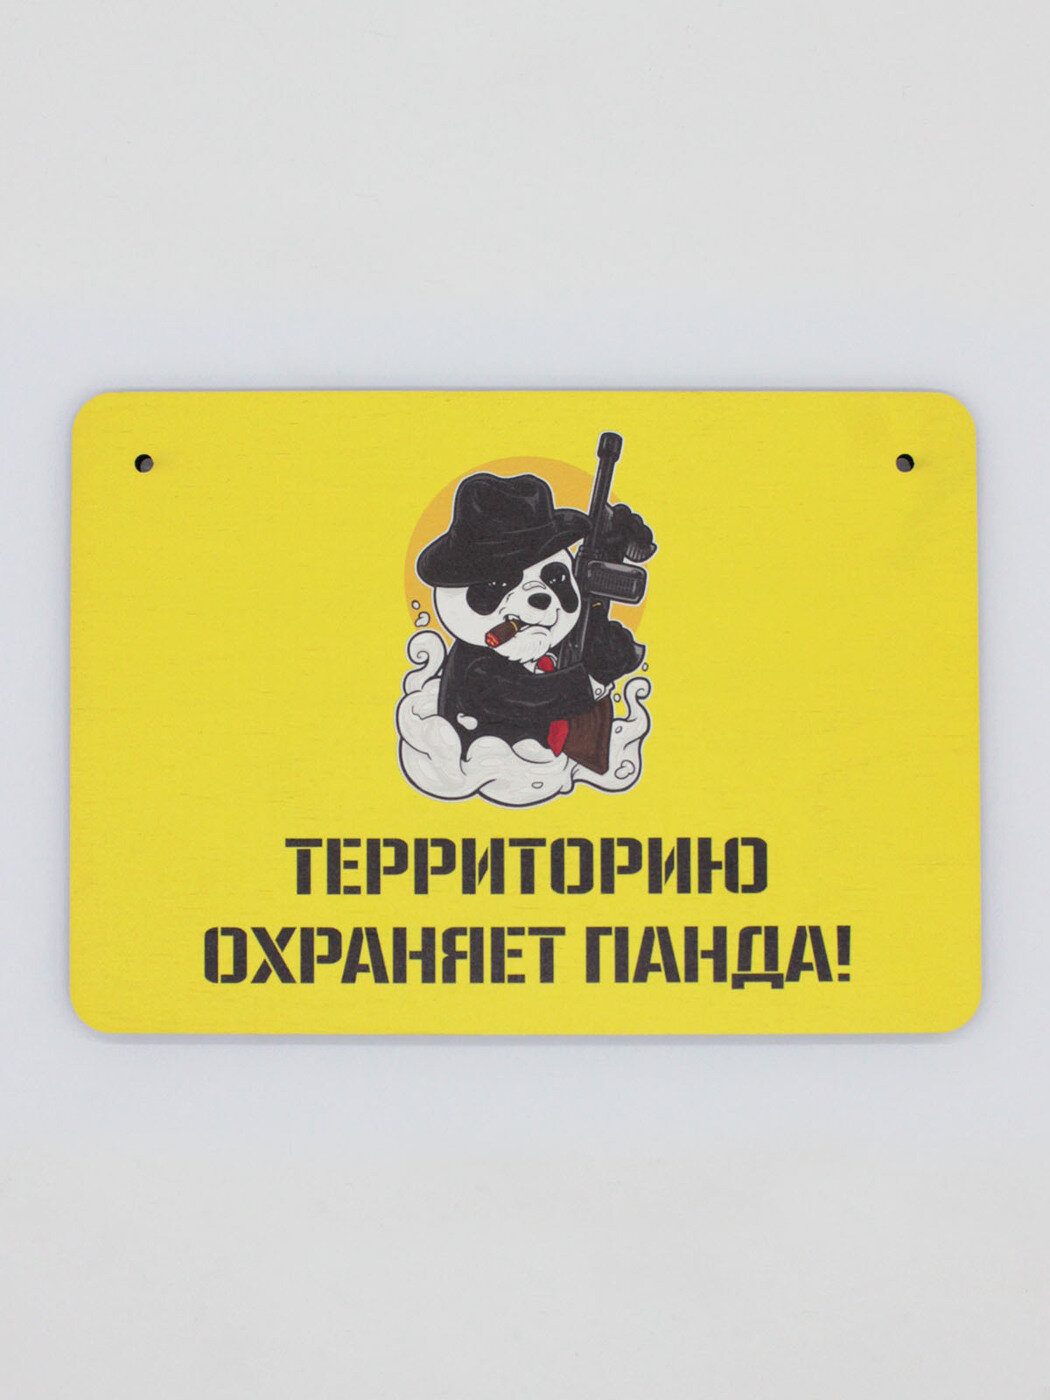 Табличка RiForm "Территорию охраняет панда!" формат А5 (21 х 14.8 см) березовая фанера 6 мм